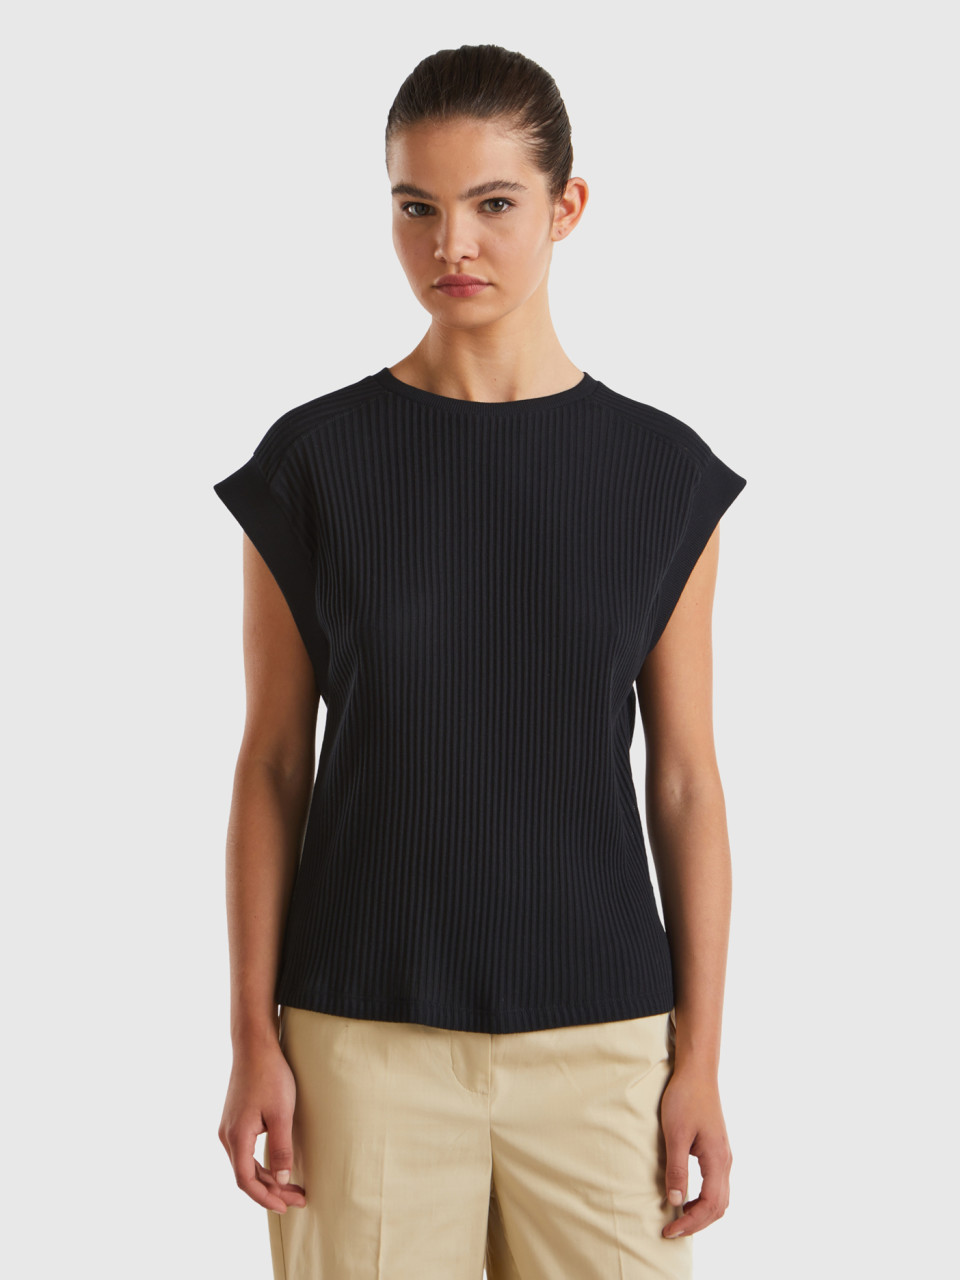 Benetton, Comfort Fit T-shirt, Black, Women